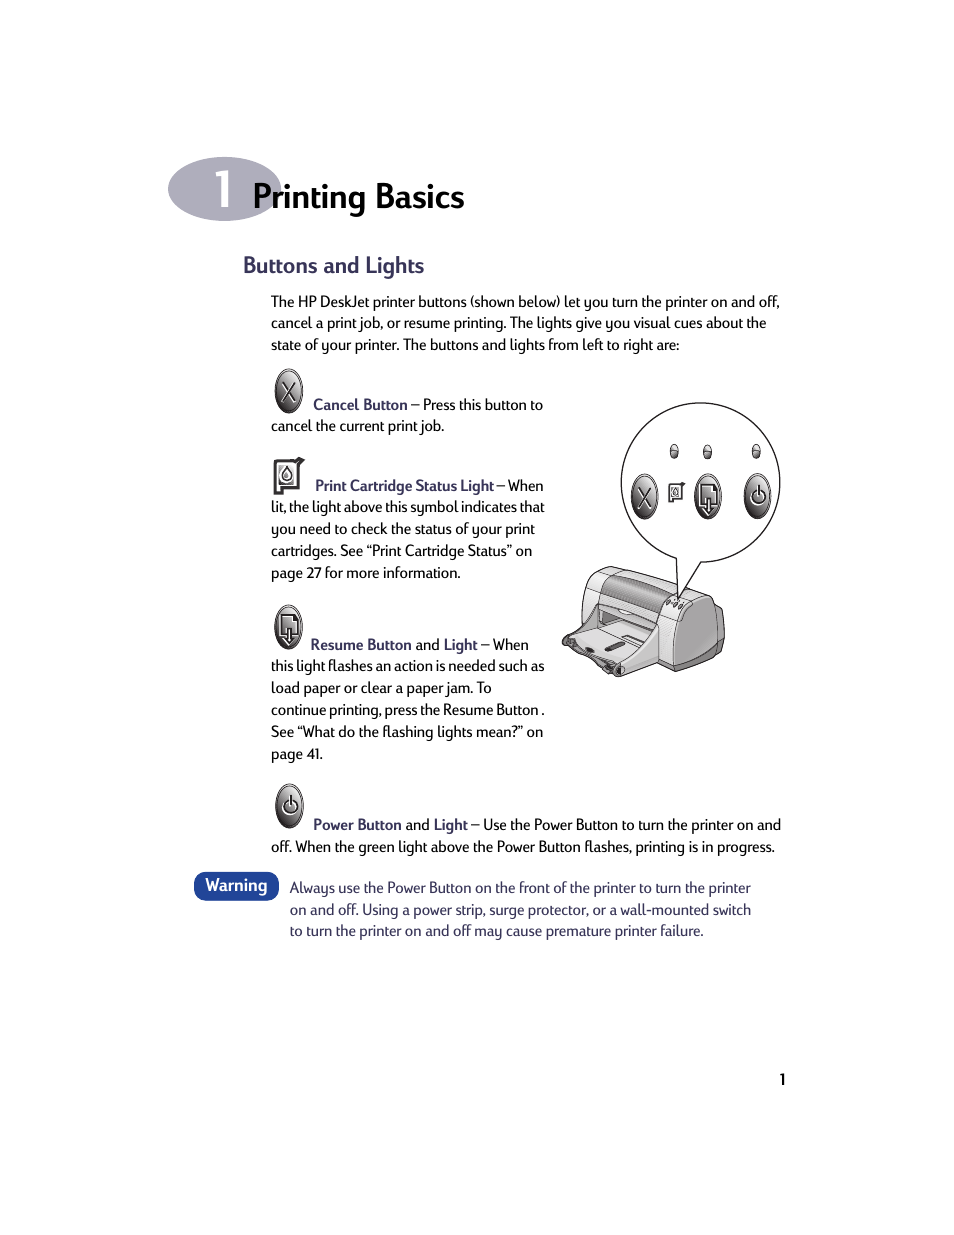 Printing basics, Buttons and lights, Chapter 1 printing basics | HP Deskjet  950c Printer User Manual | Page 8 / 73